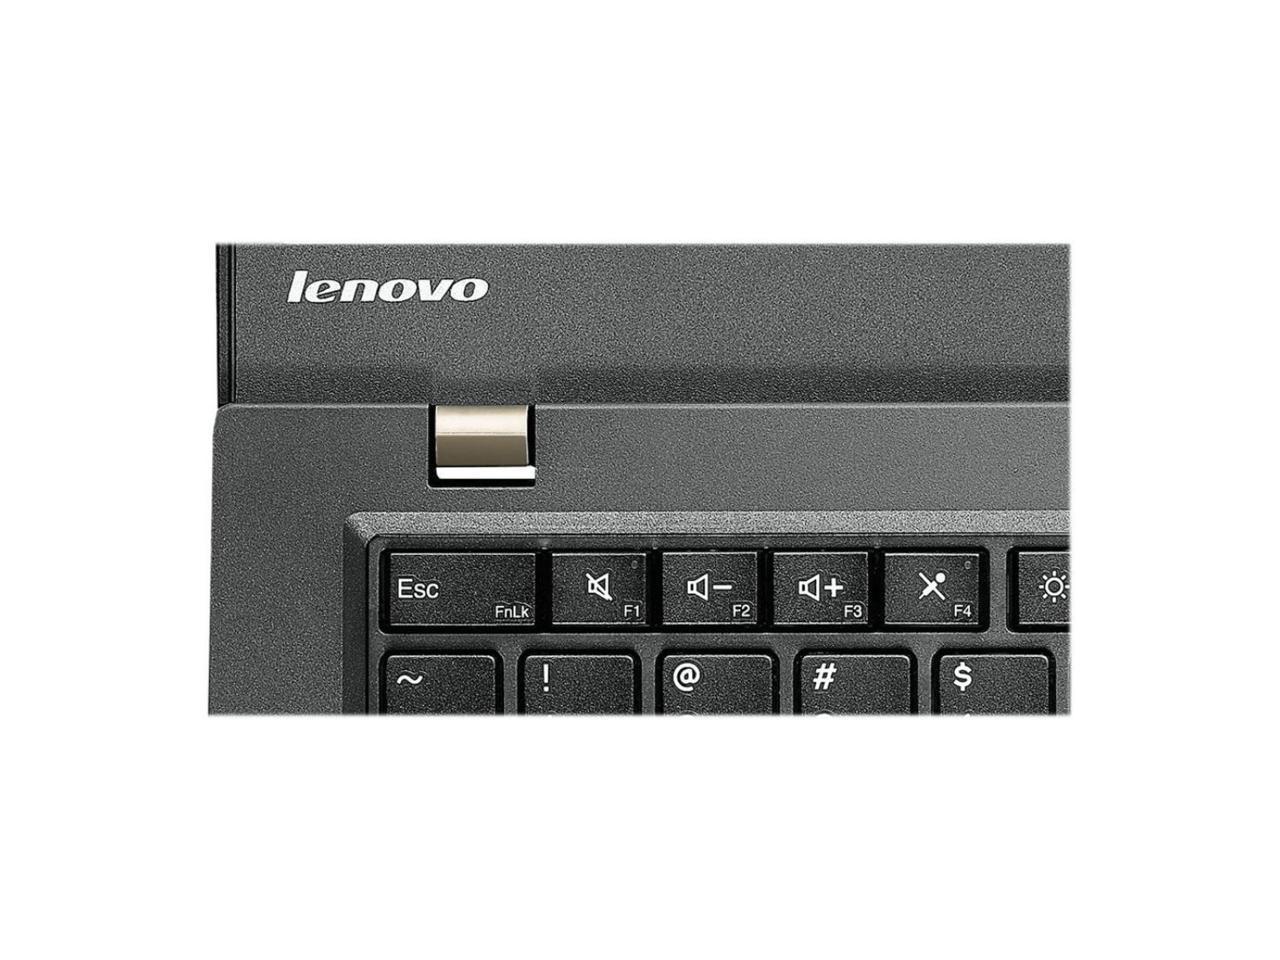 Lenovo ThinkPad T450S 14.0-in Laptop - Intel Core i5 5300U 5th Gen 2.30 GHz 8GB 256GB SSD Windows 10 Pro 64-Bit - Webcam